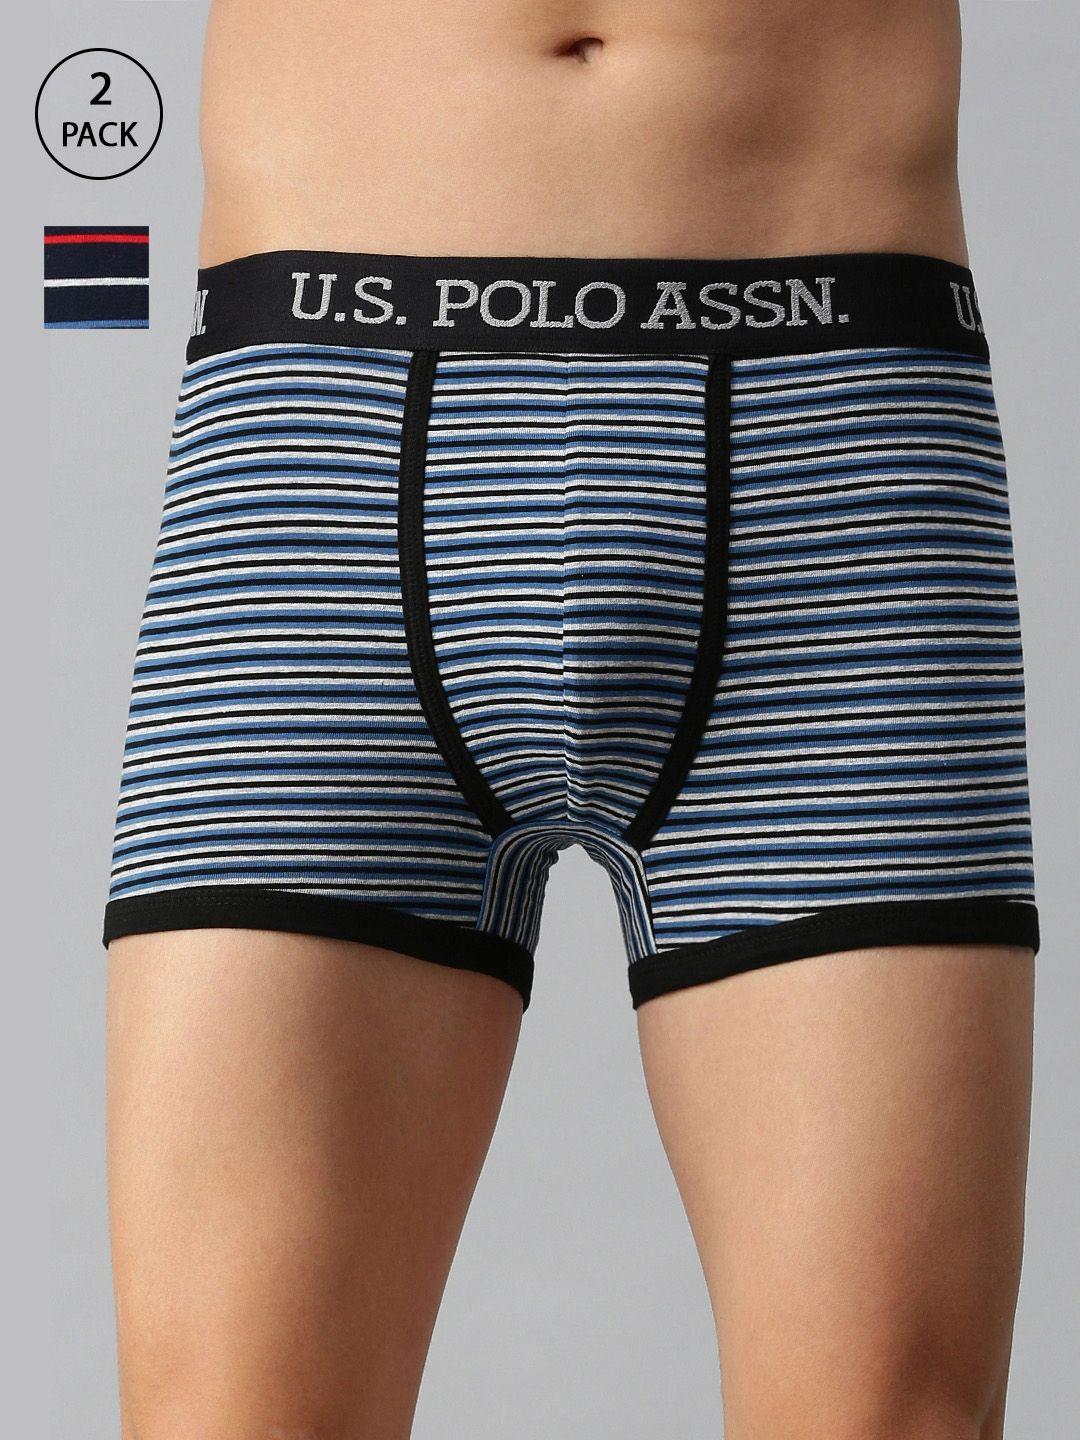 U.S. Polo Assn. Men Pack Of 2 Assorted Striped Trunks I004-GR0-P2